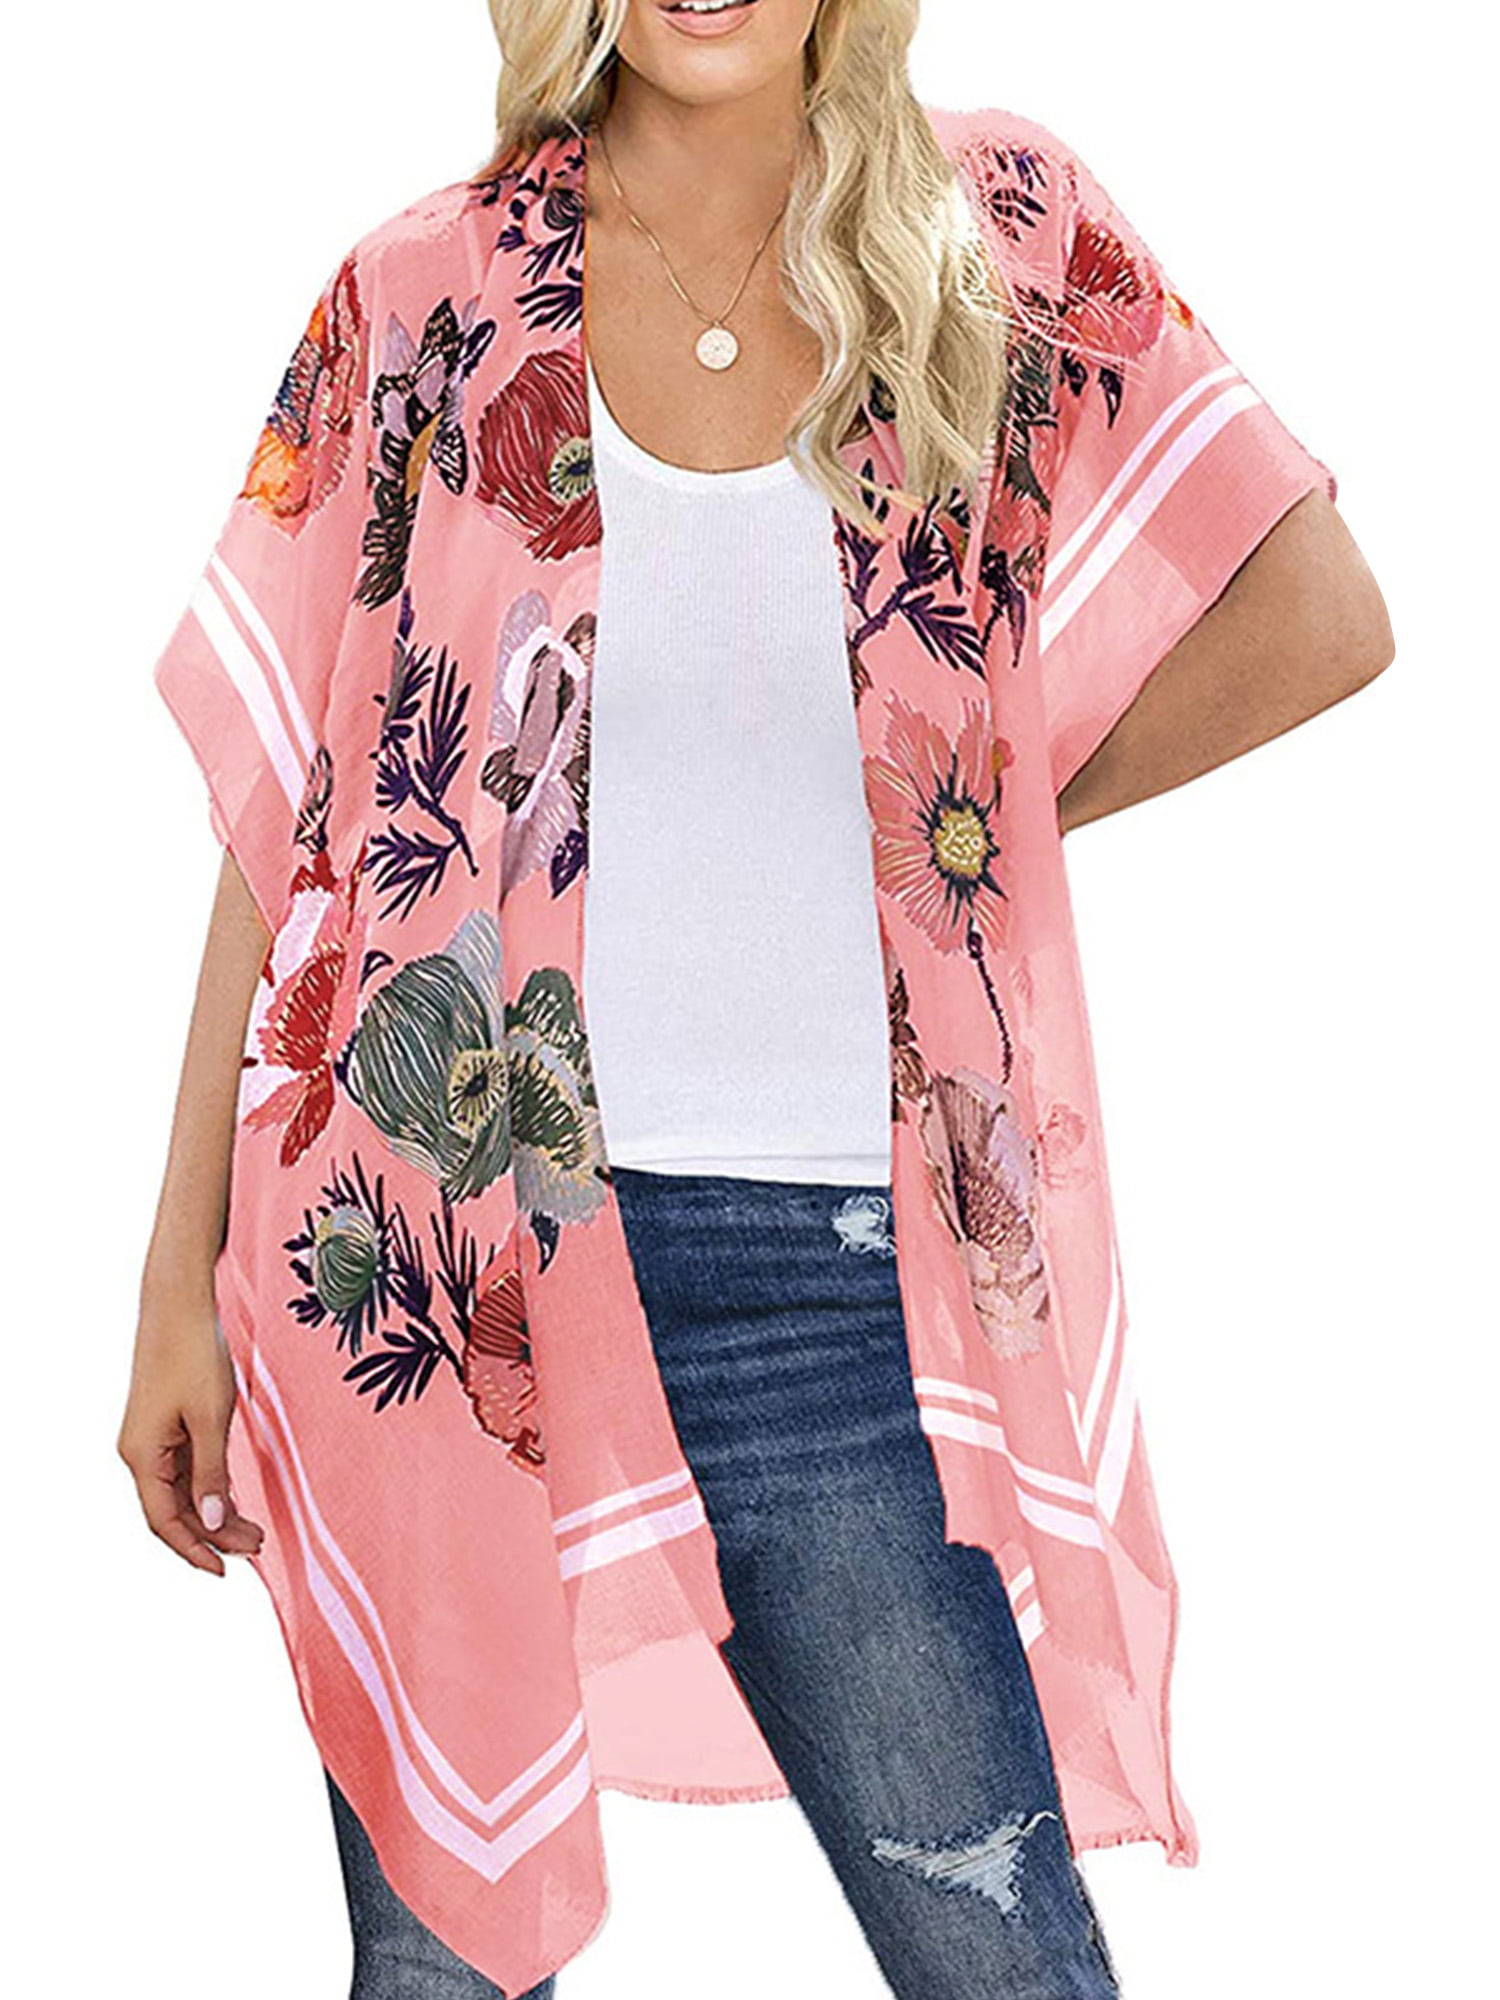 Womens Flowy Chiffon Kimono Cardigan Top Boho Floral Beach Cover Up Casual Loose Shirt 